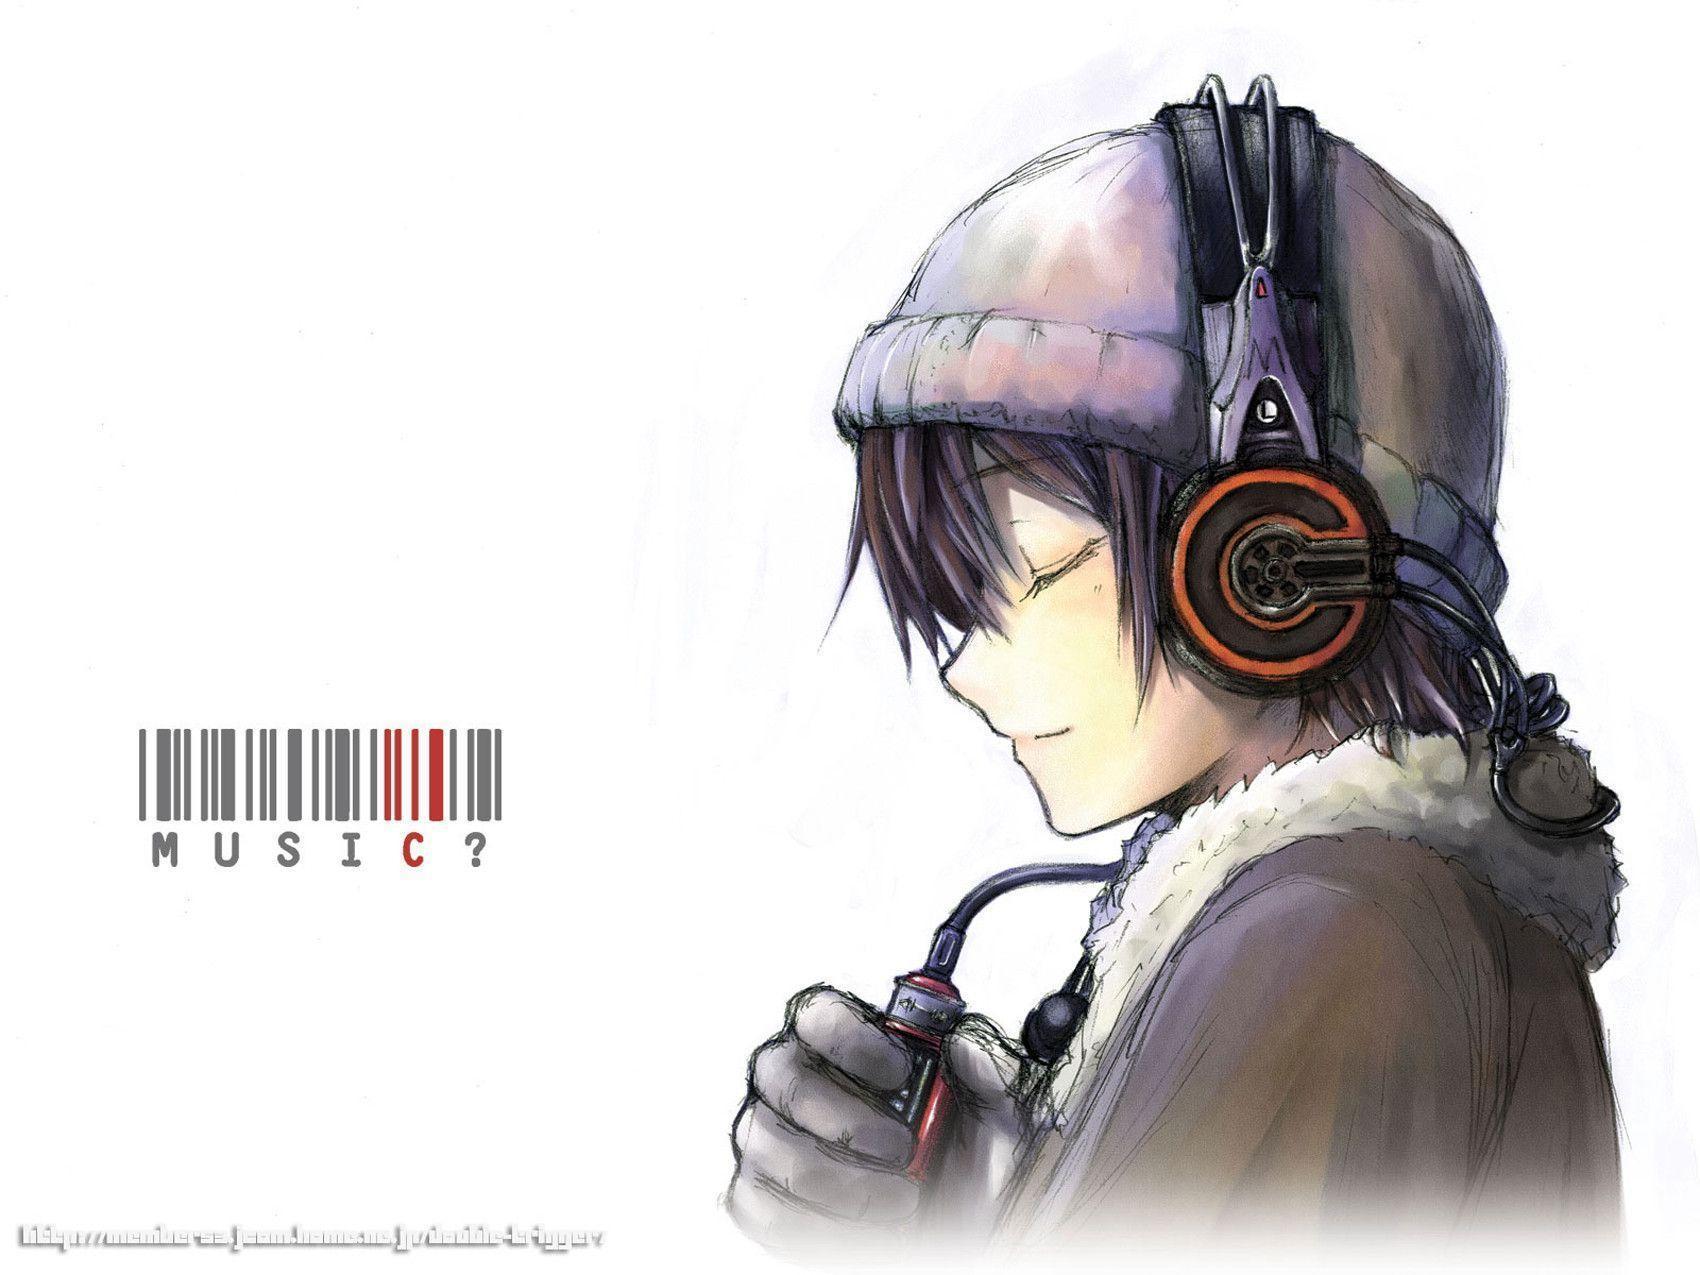 Headphone in anime : r/anime